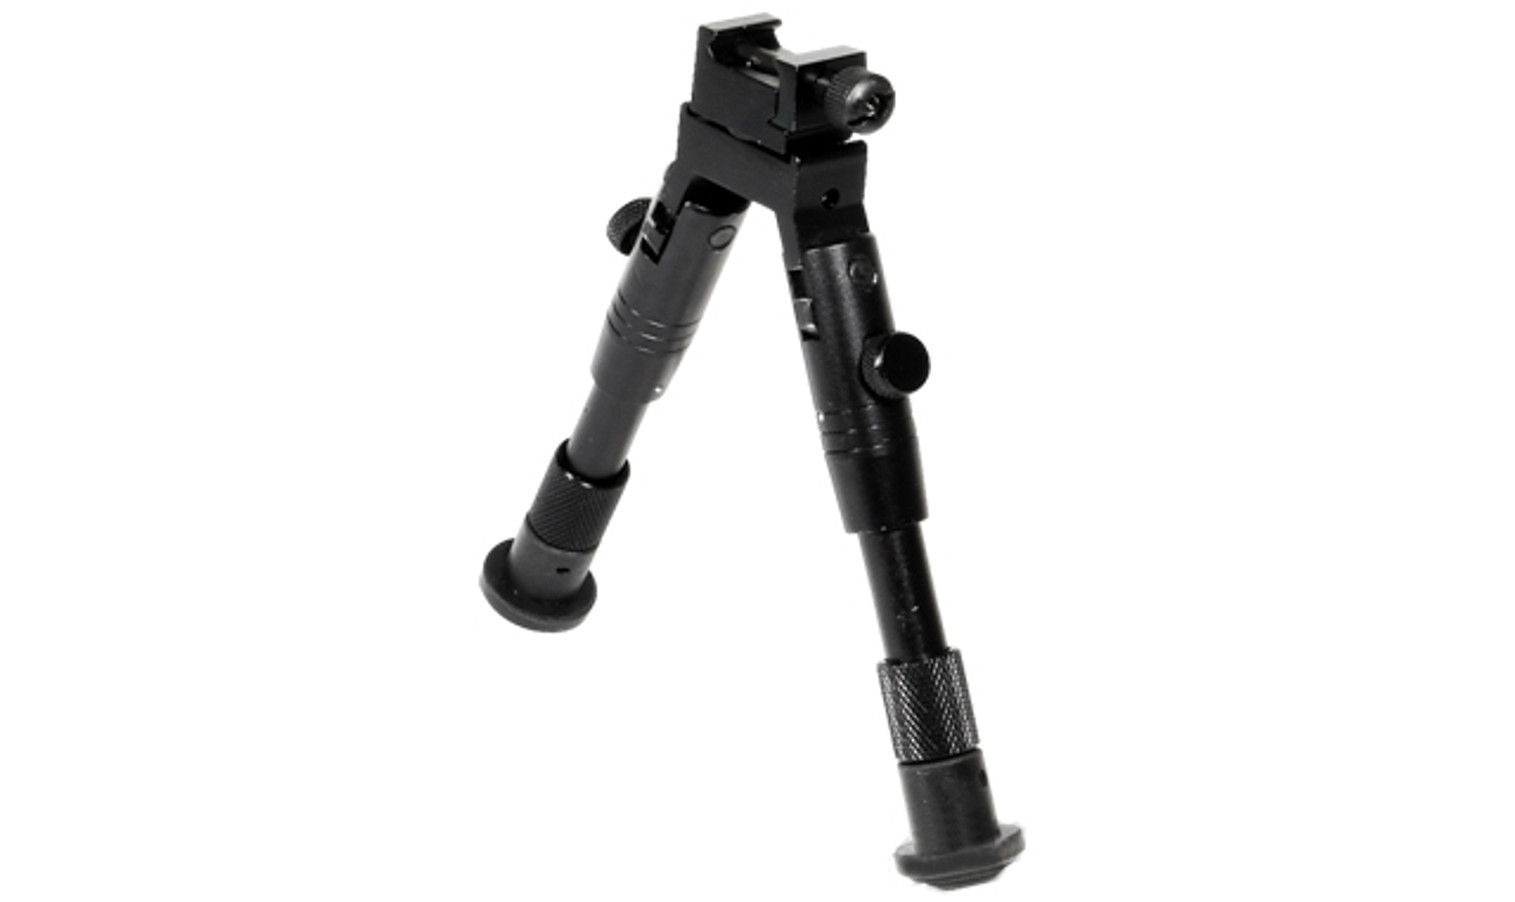 UTG Universal Shooter's Bipod - SWAT/Combat Profile Adjustable Height